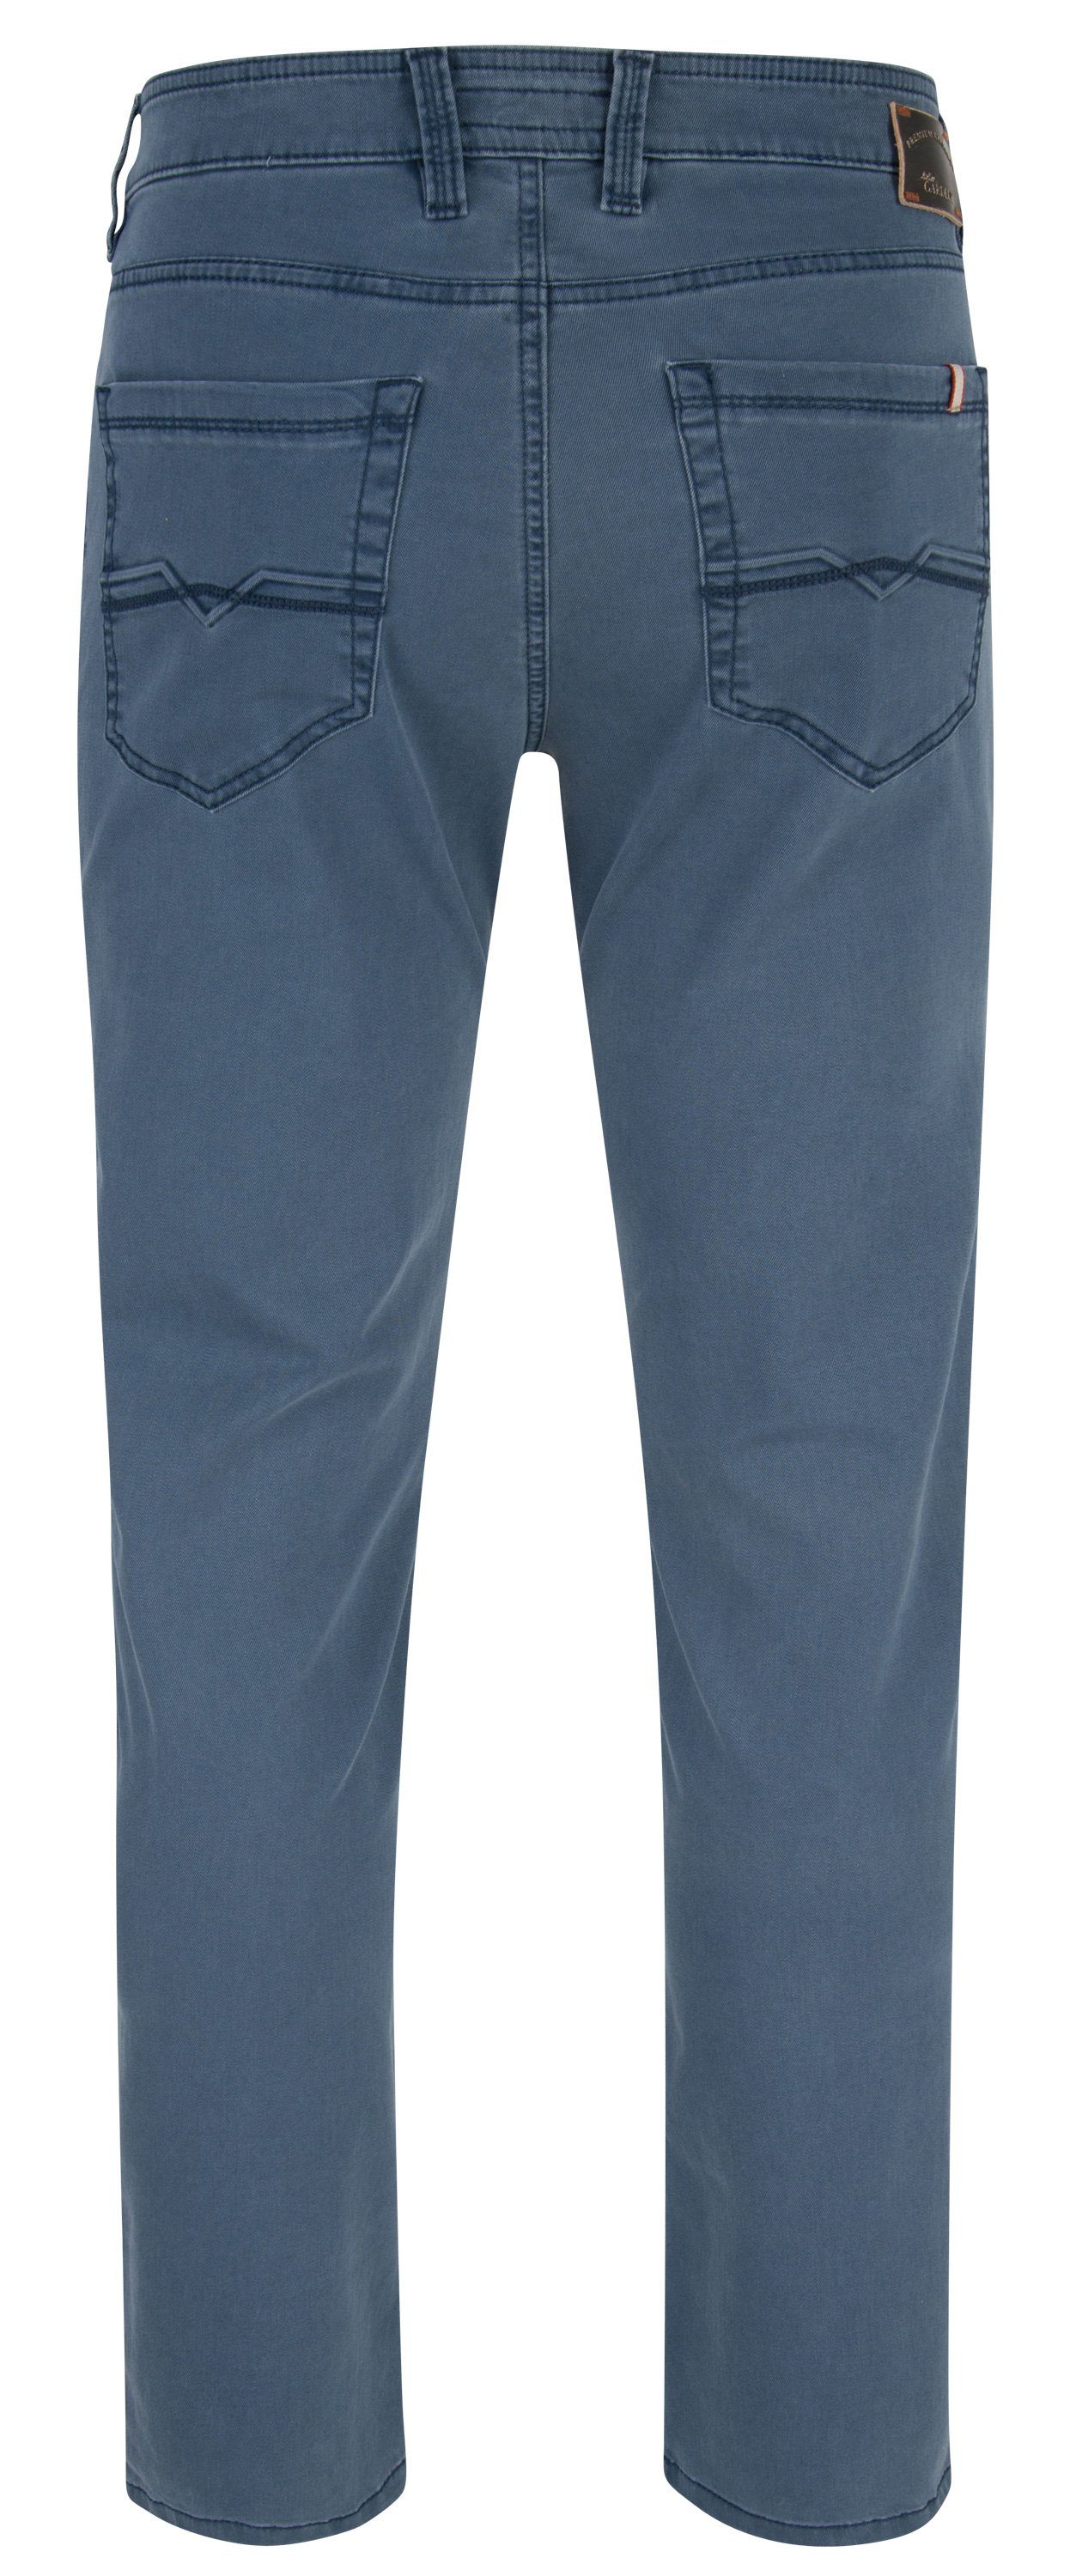 BATU GARDEUR GARDEUR blue ATELIER 2-0-411121-66 dove Atelier 5-Pocket-Jeans